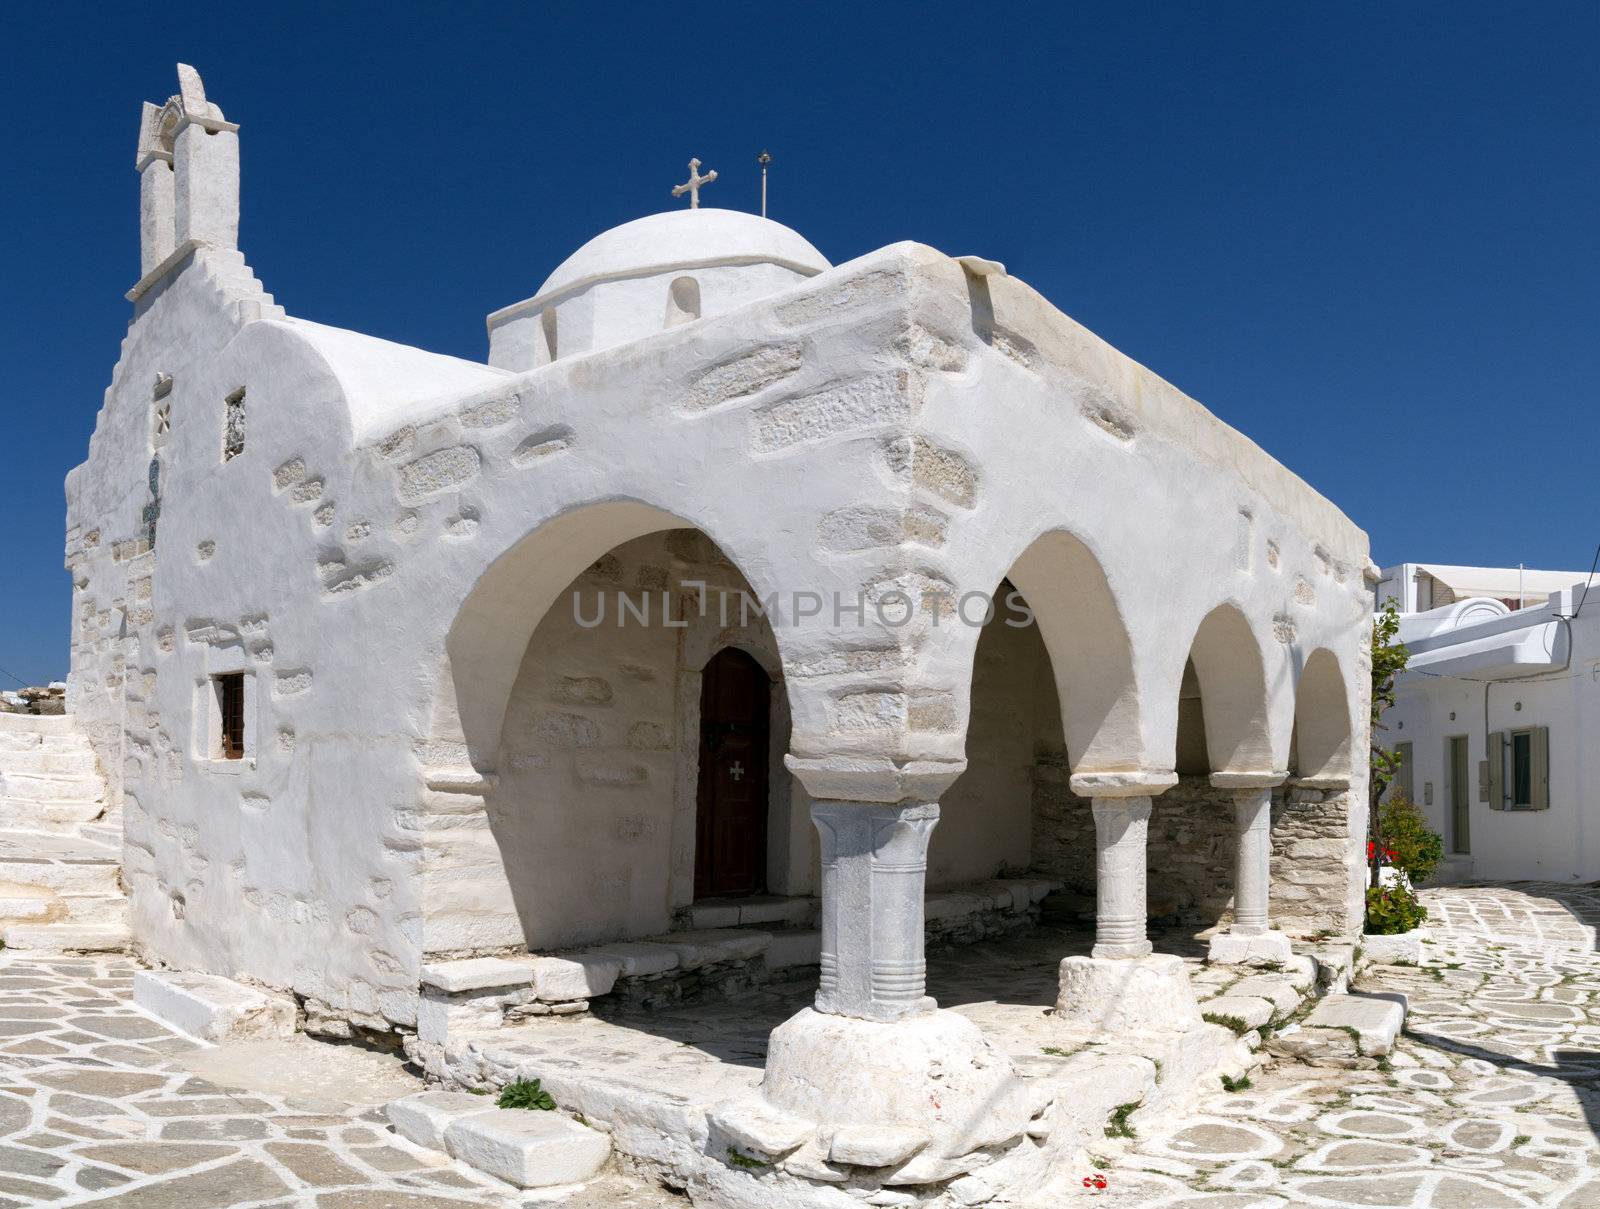 Typical church in Greece by chrisroll